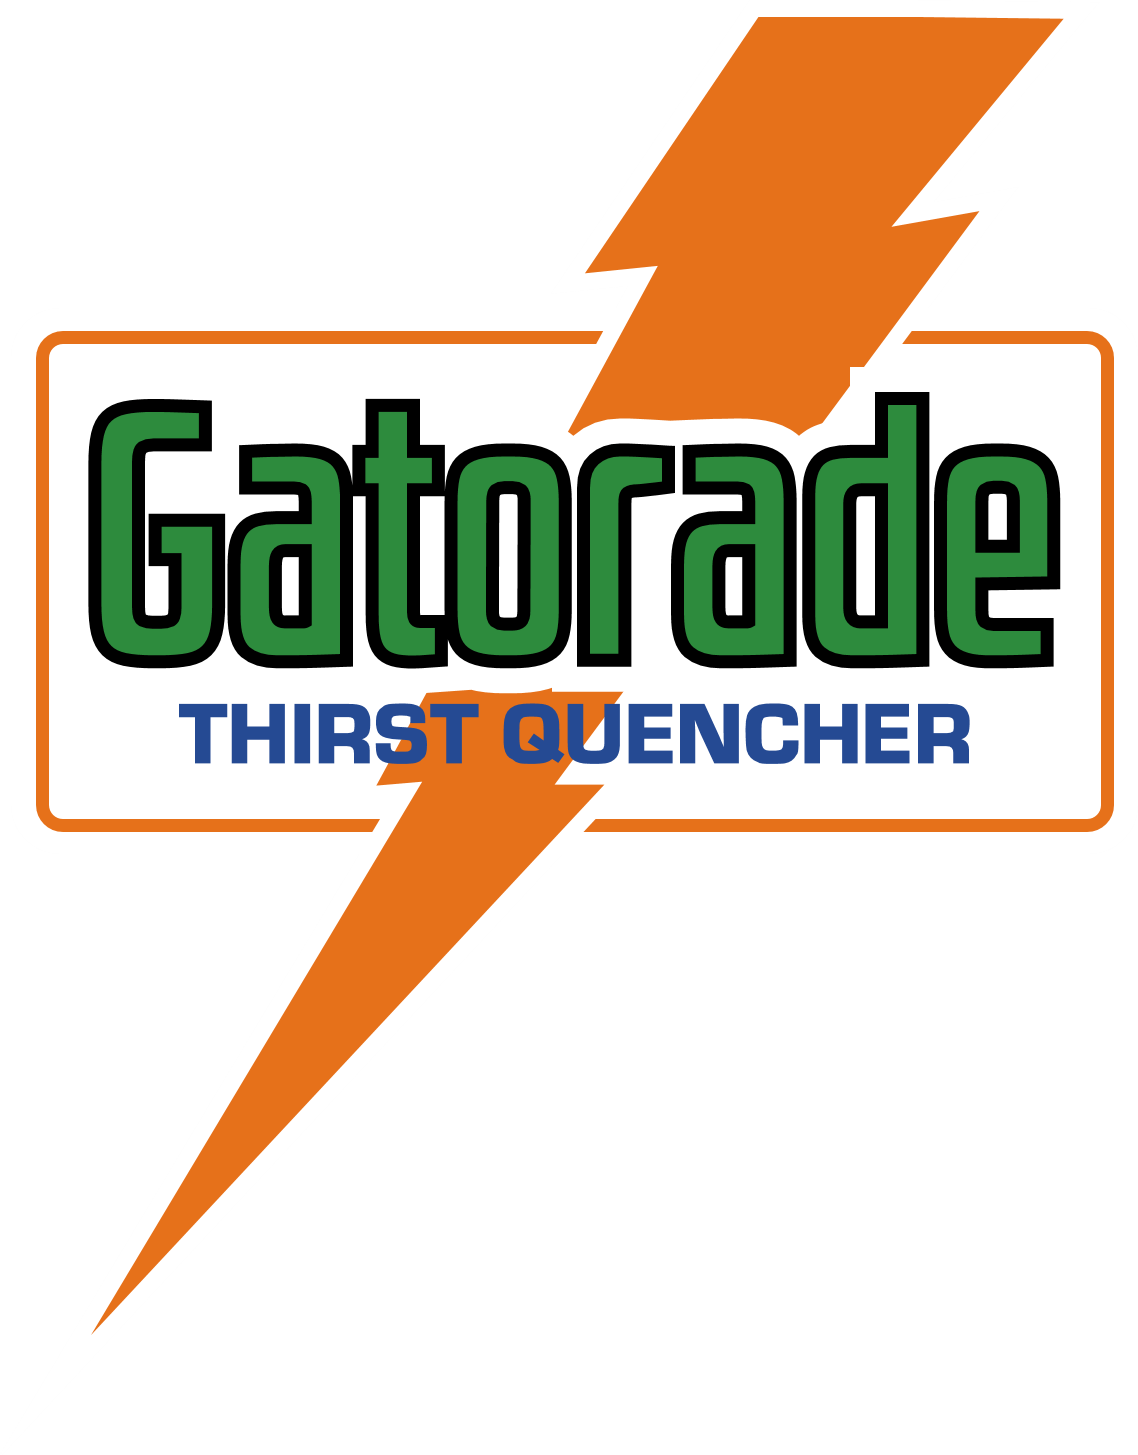 Old Gatorade Logo - Gatorade (El Kadsre)